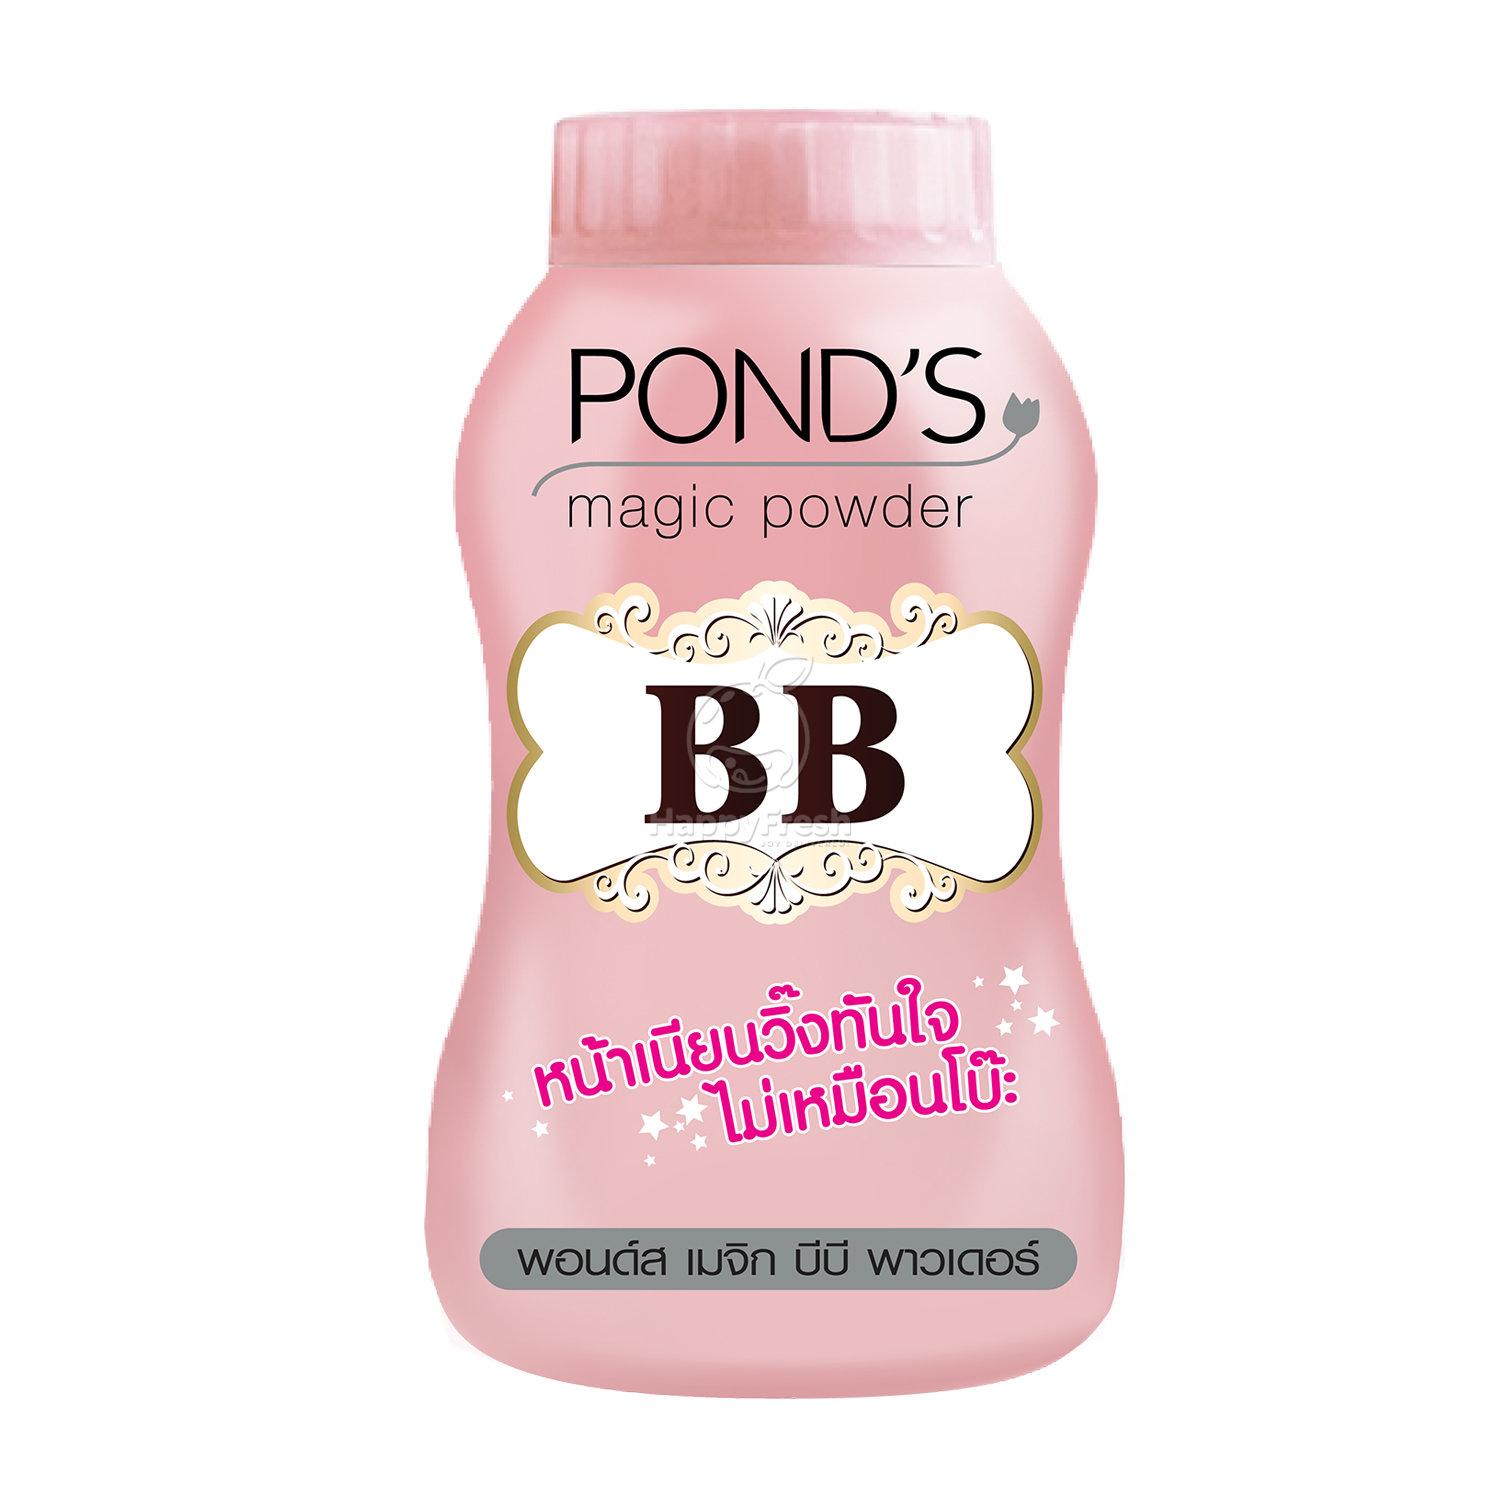 Ponds BB Magic Powder - 50gm